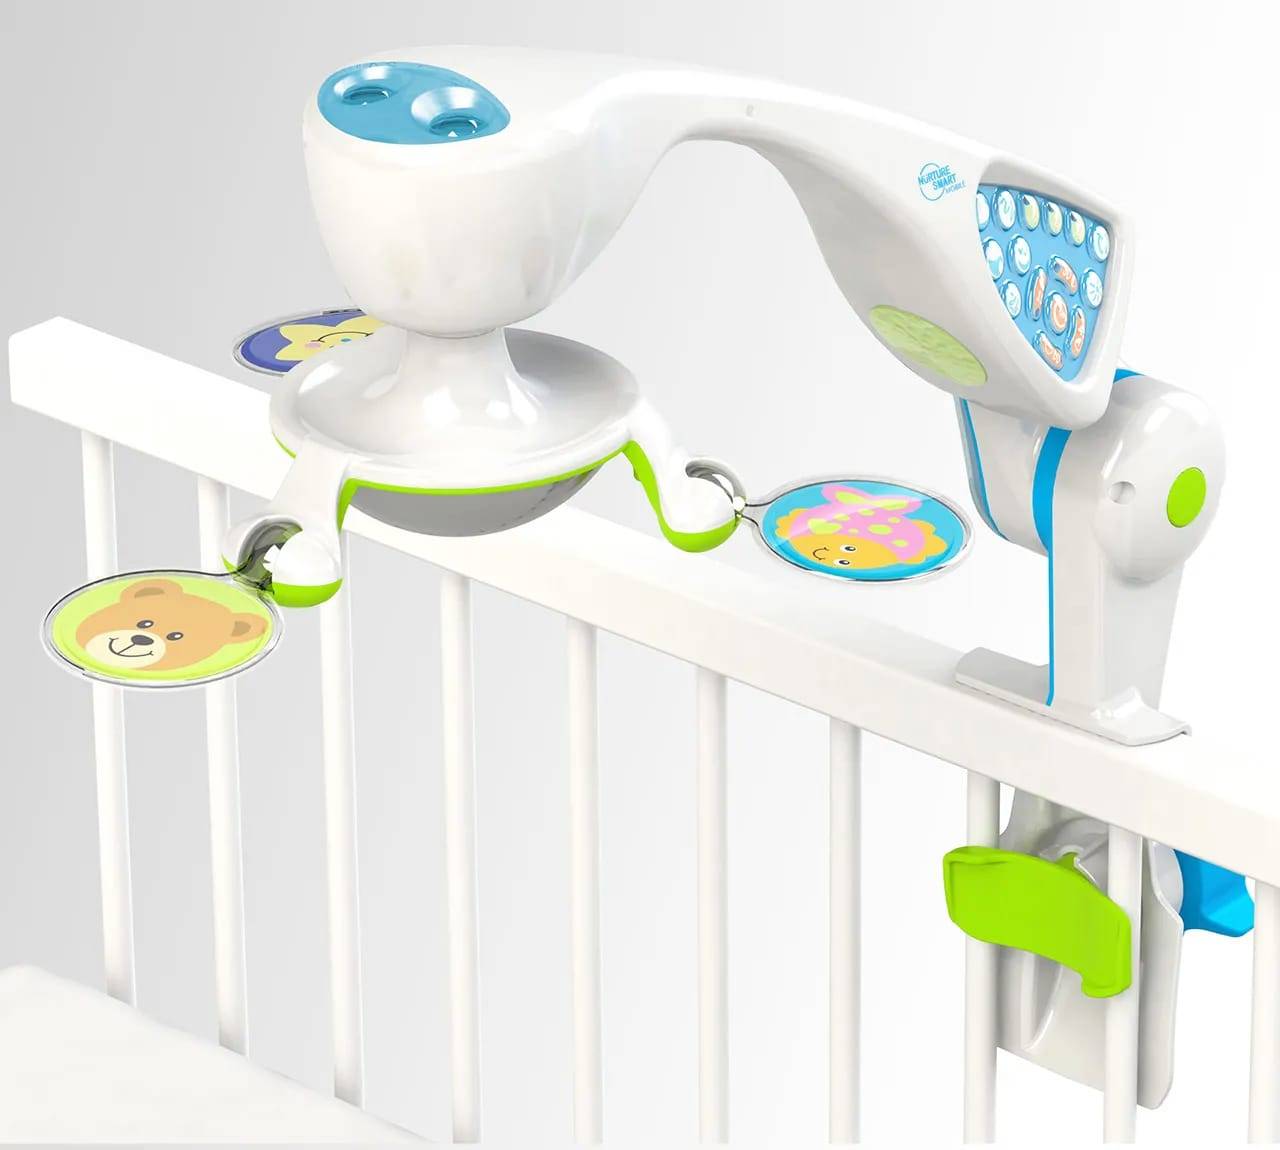 Nurture Smart Baby Crib Mobile & Projector